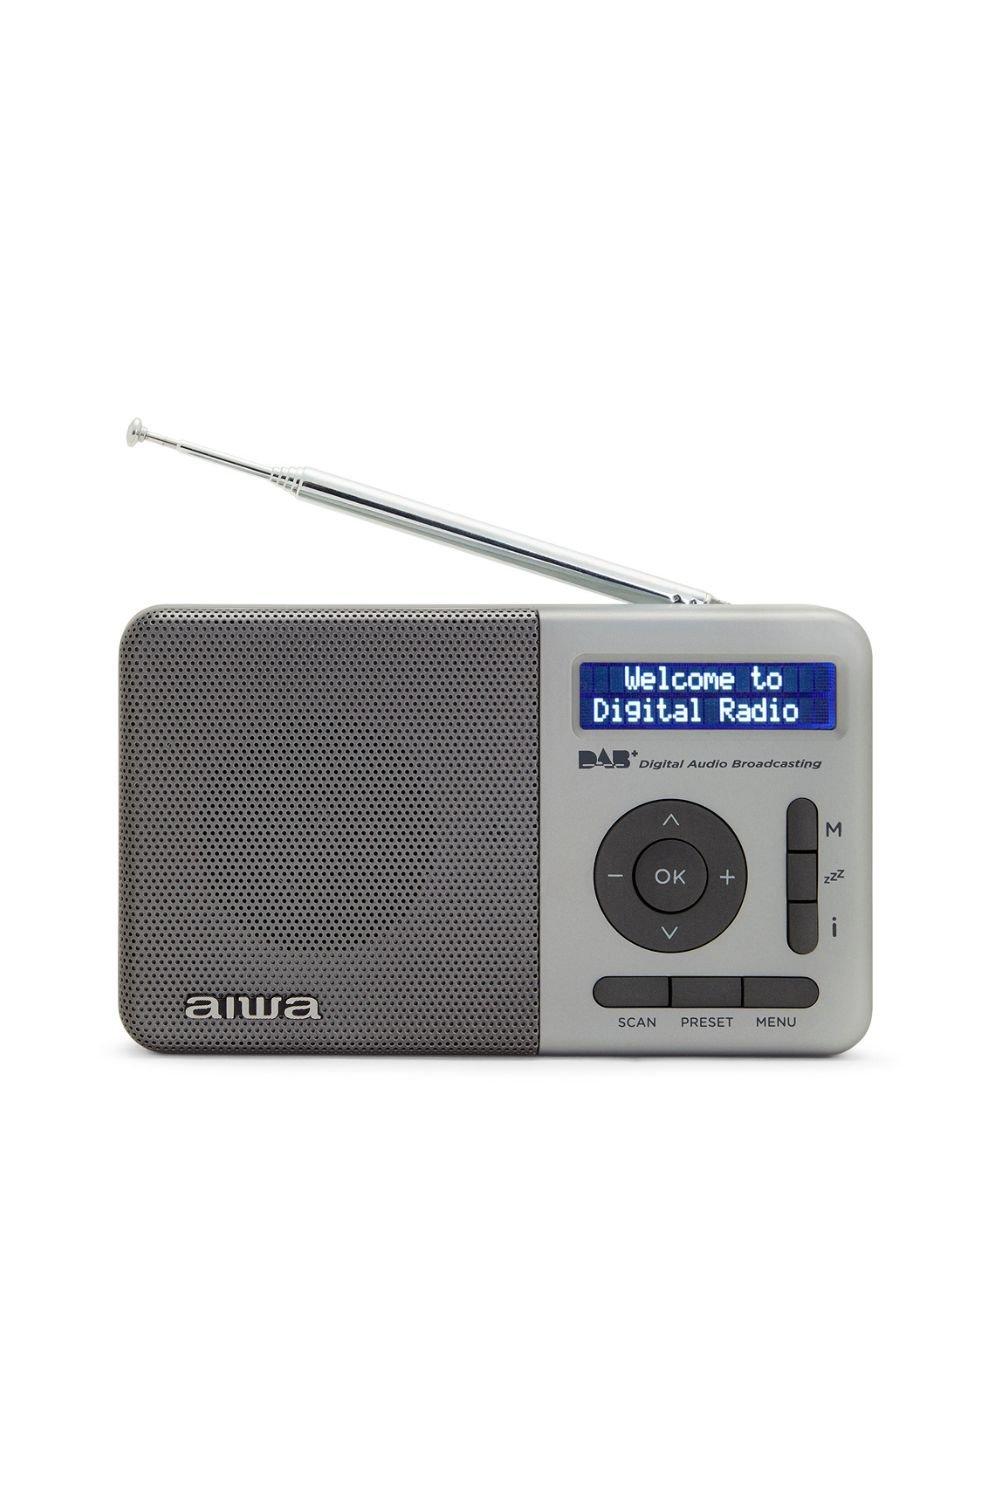 RD-40DAB Digital Portable Radio Dab+/FM-RDS Radio with Dual Alarm Clock